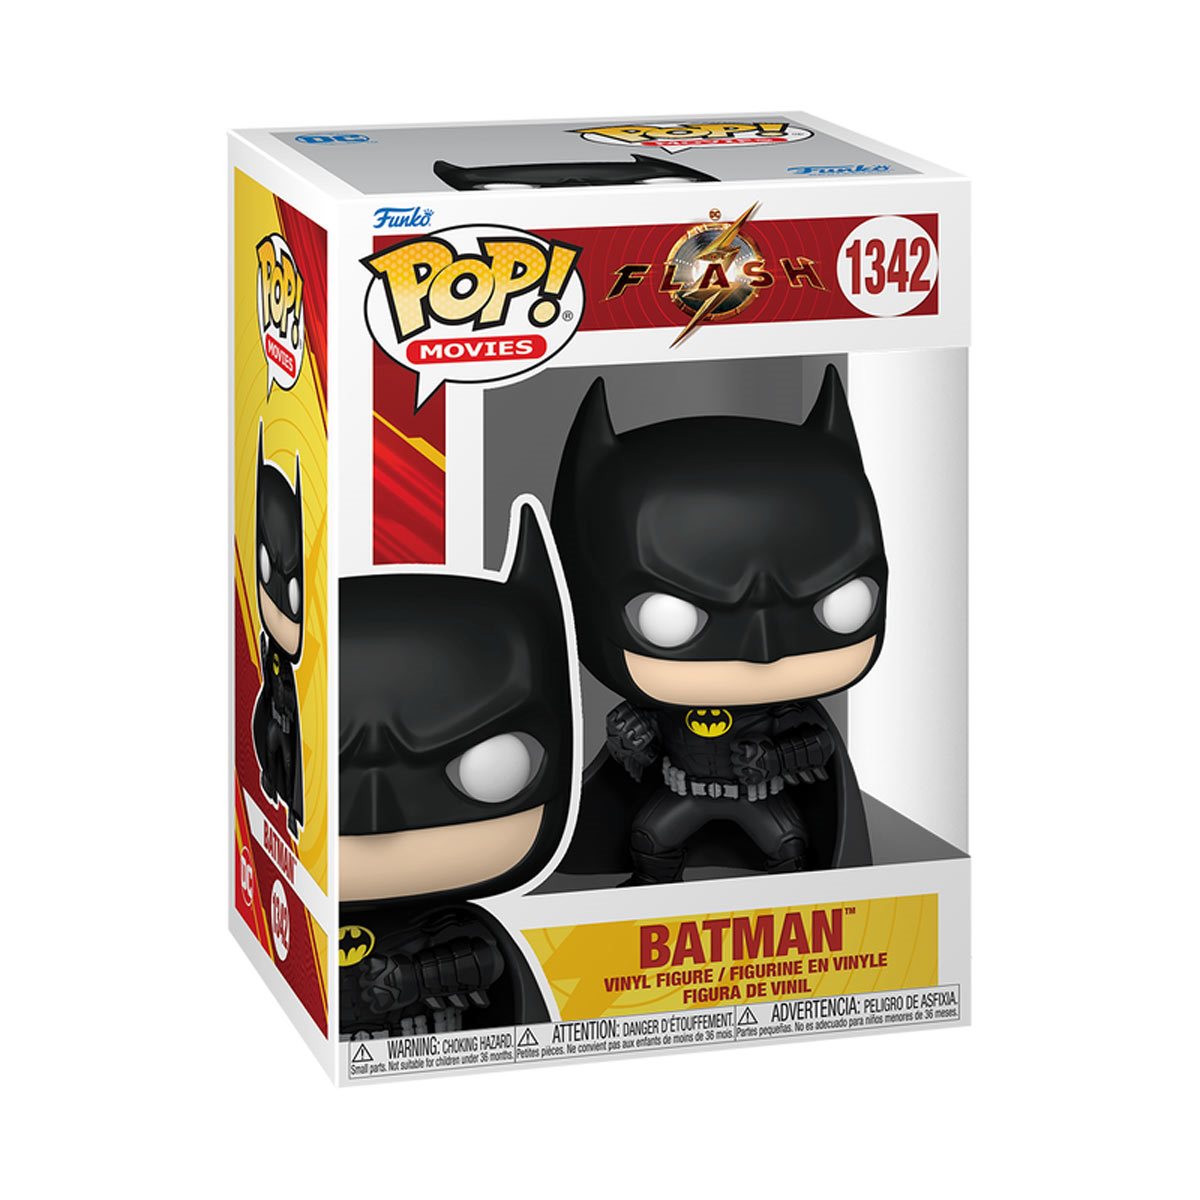 The Flash Movie Funko Pop Batman Pop in a box - Heretoserveyou